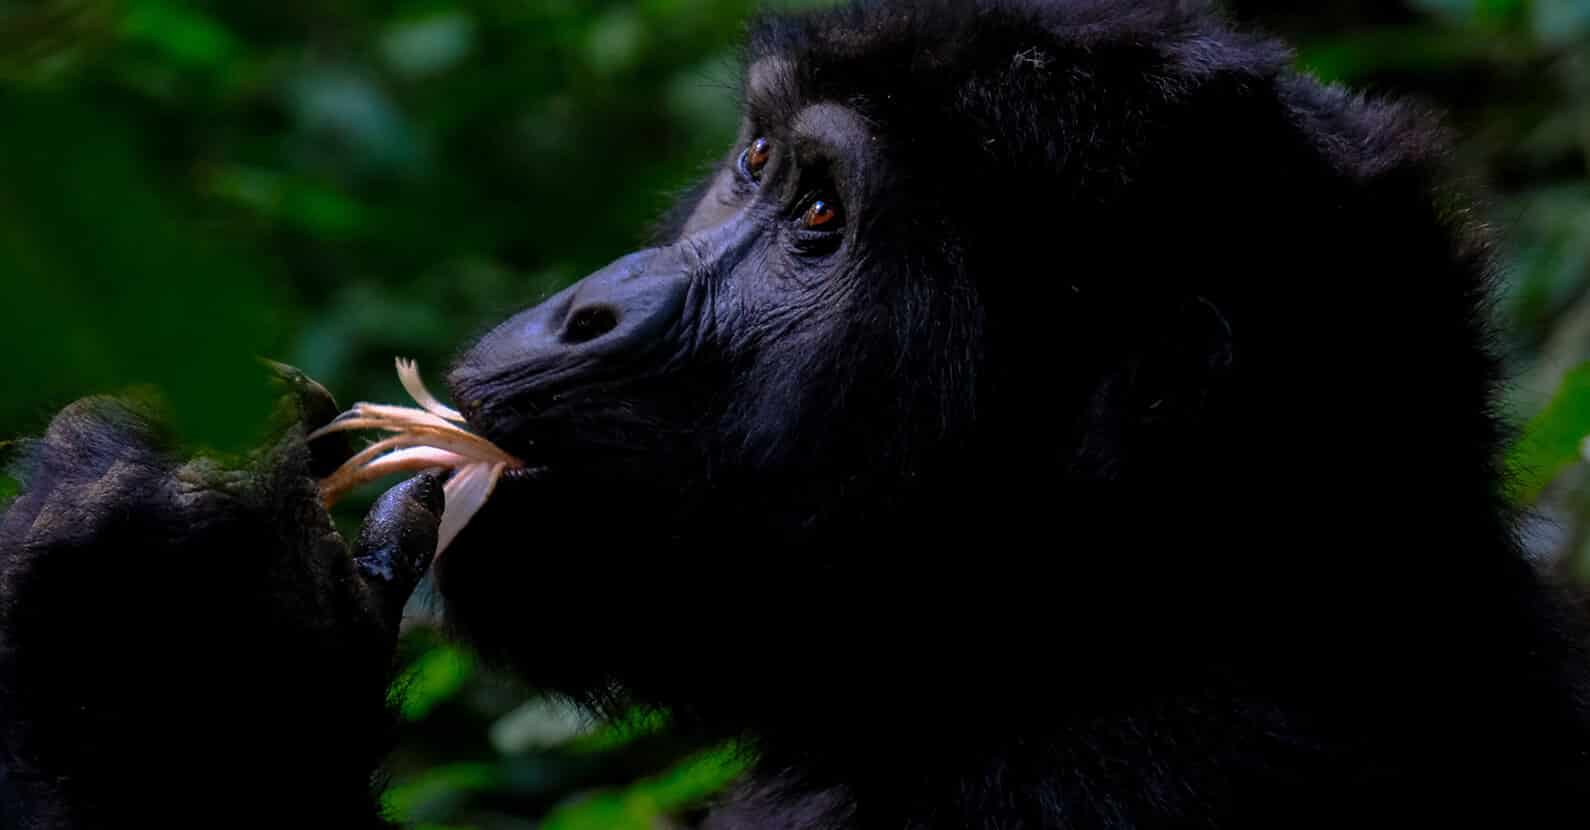 Mountain gorilla in the Bwindi Impenetrable National Park.